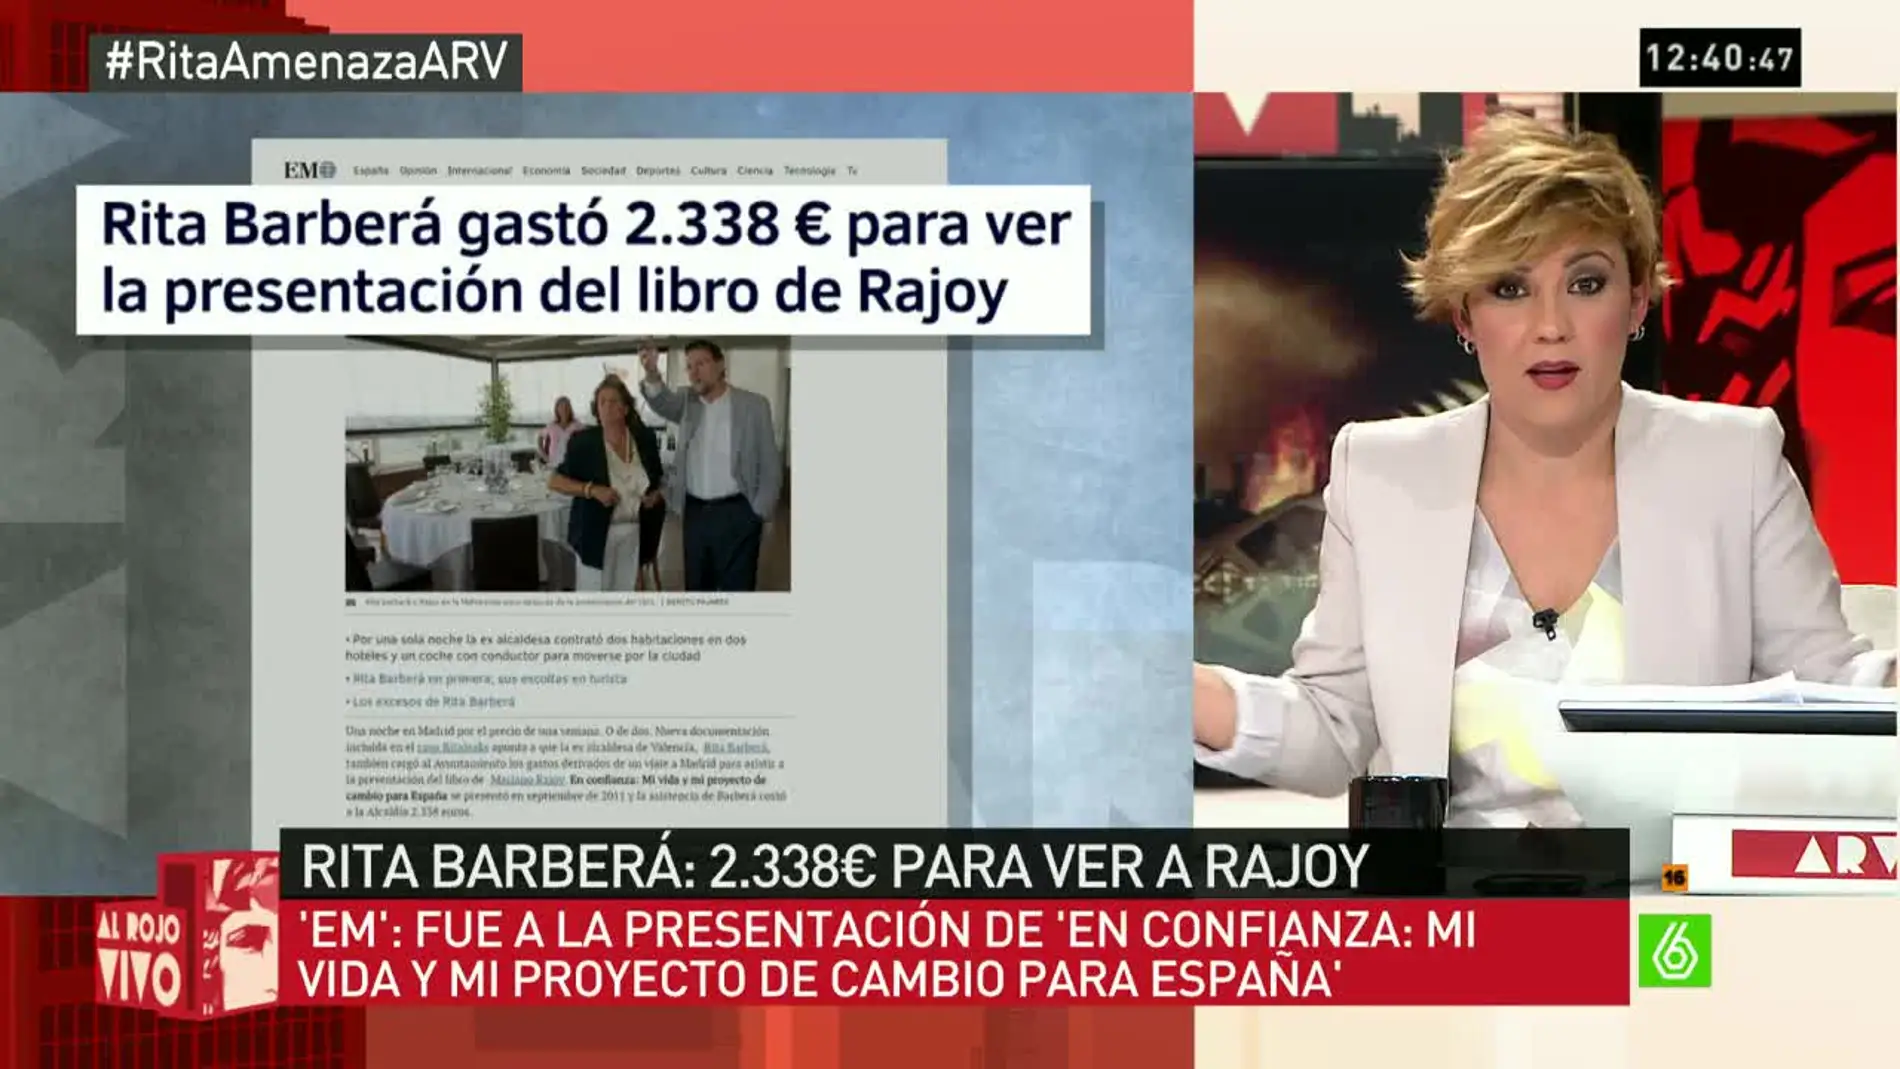 Barberá gastó 2.338 euros para ver a Rajoy